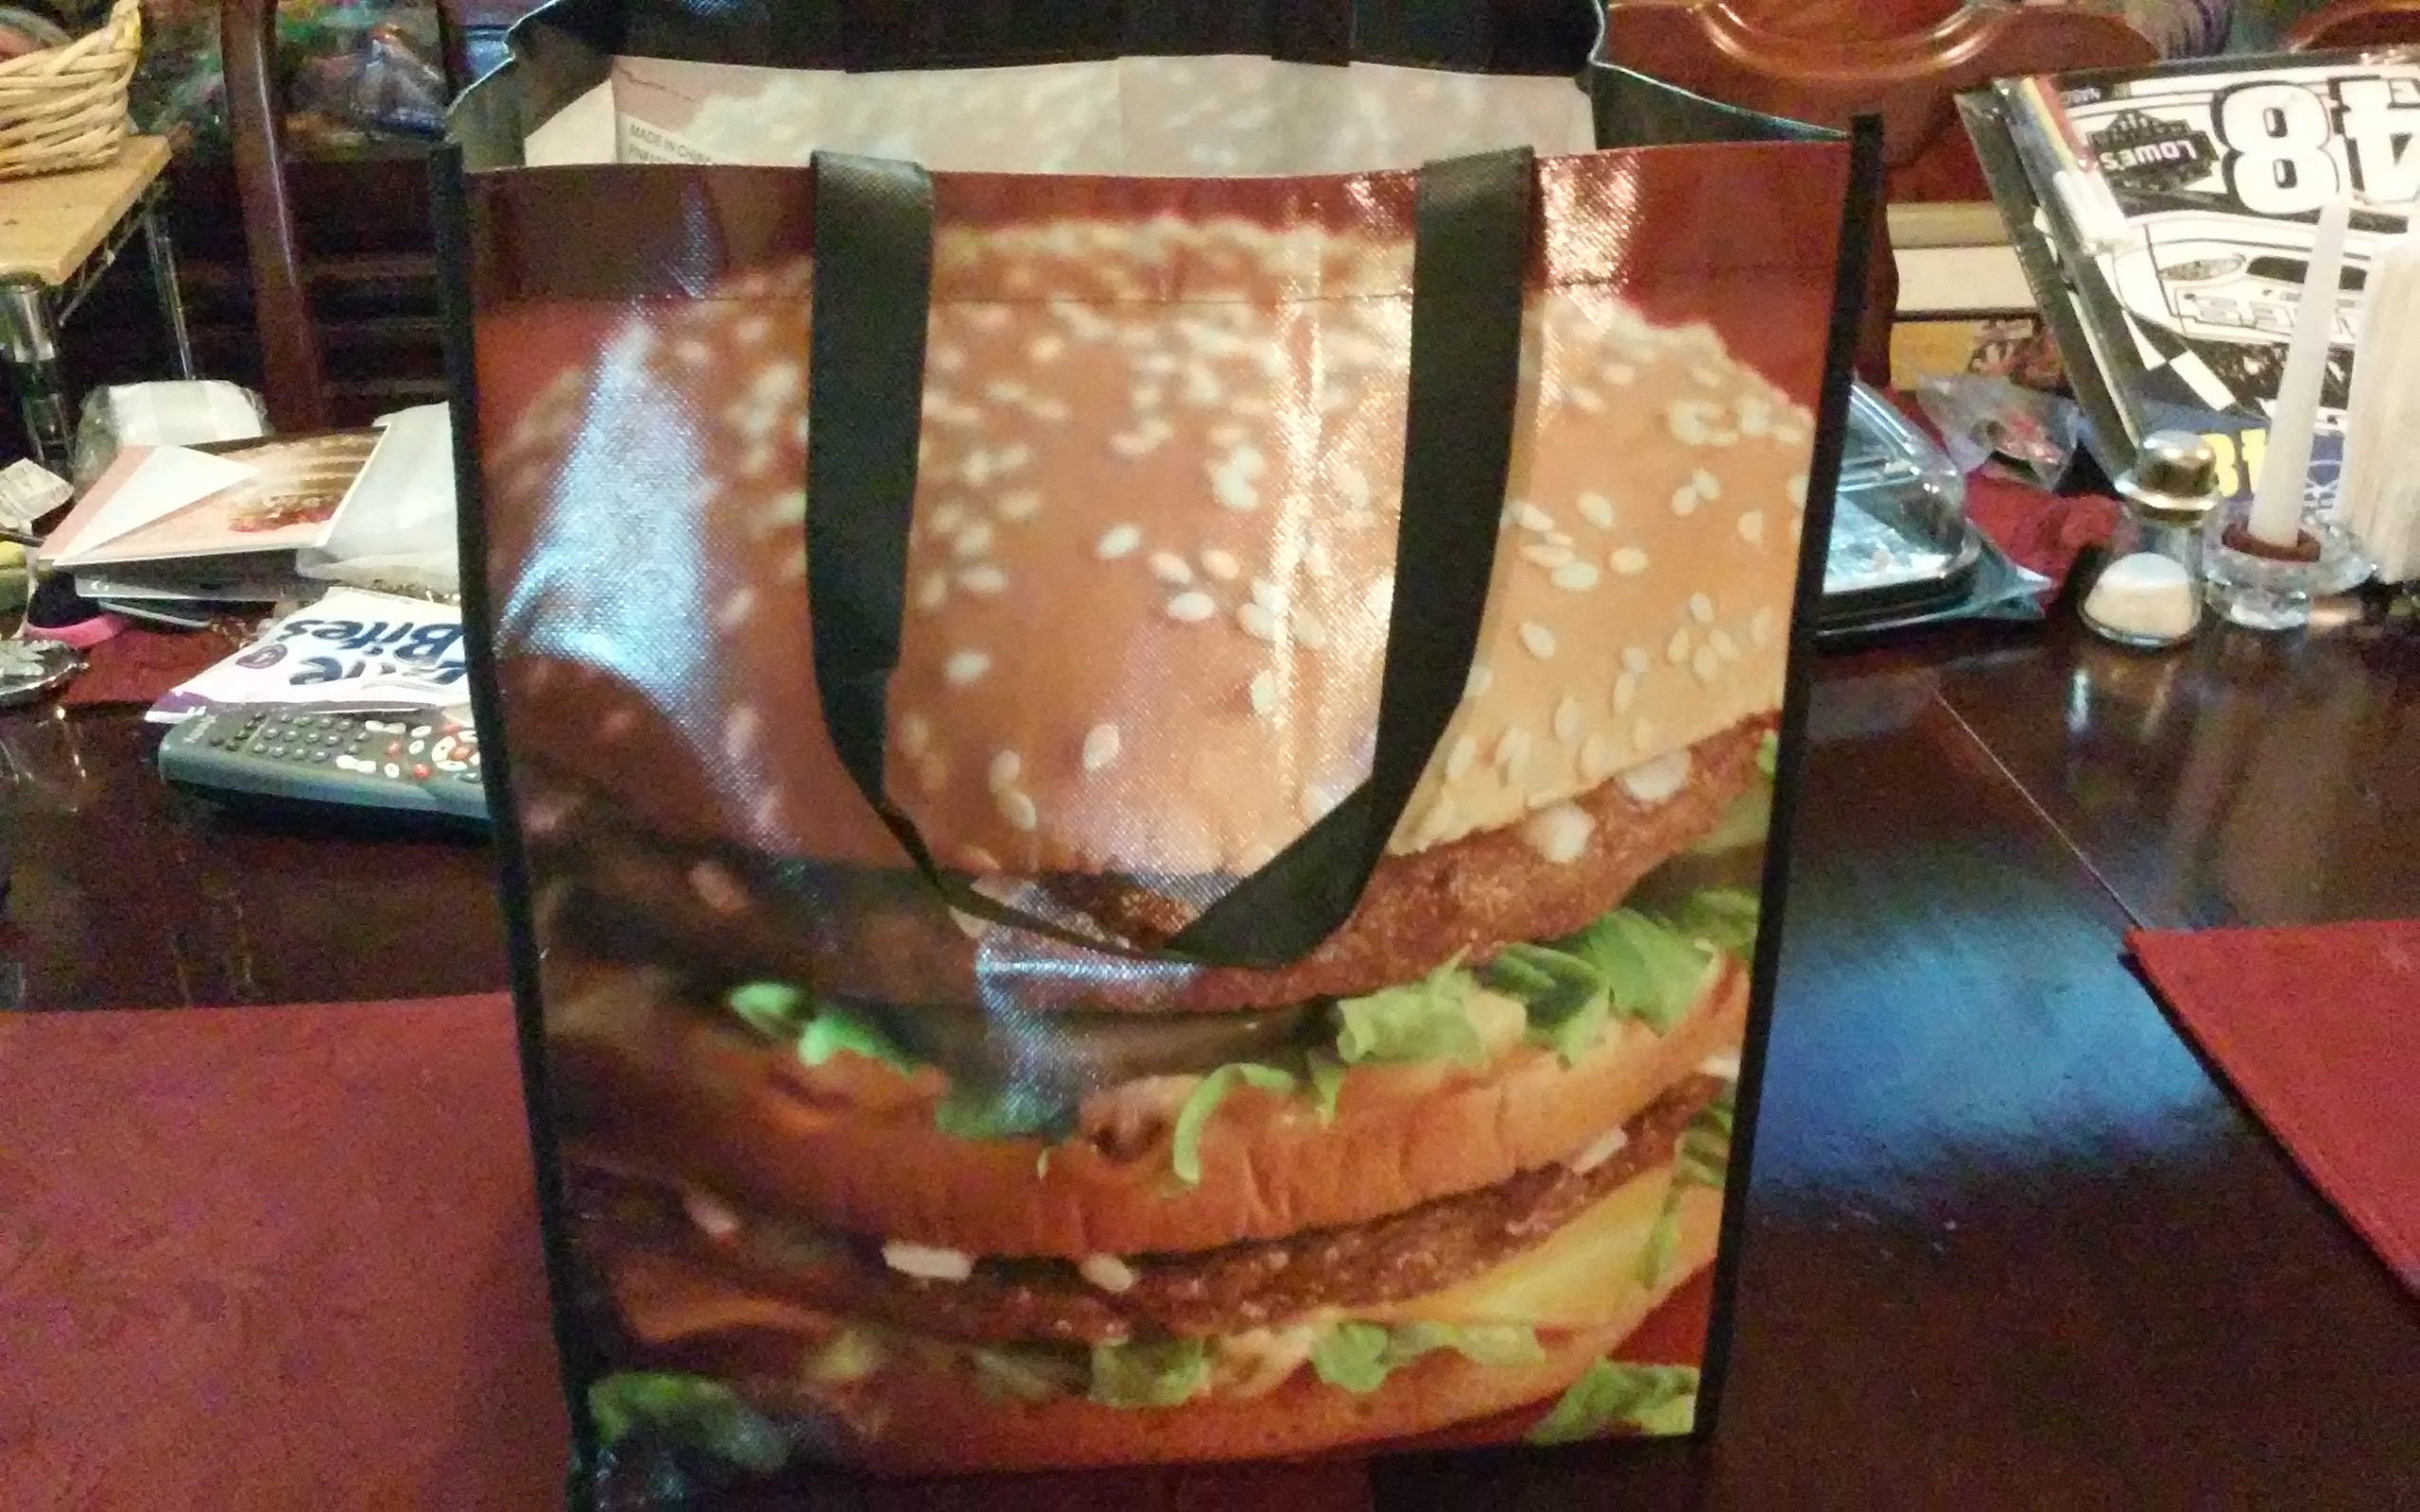 mcdonalds bag